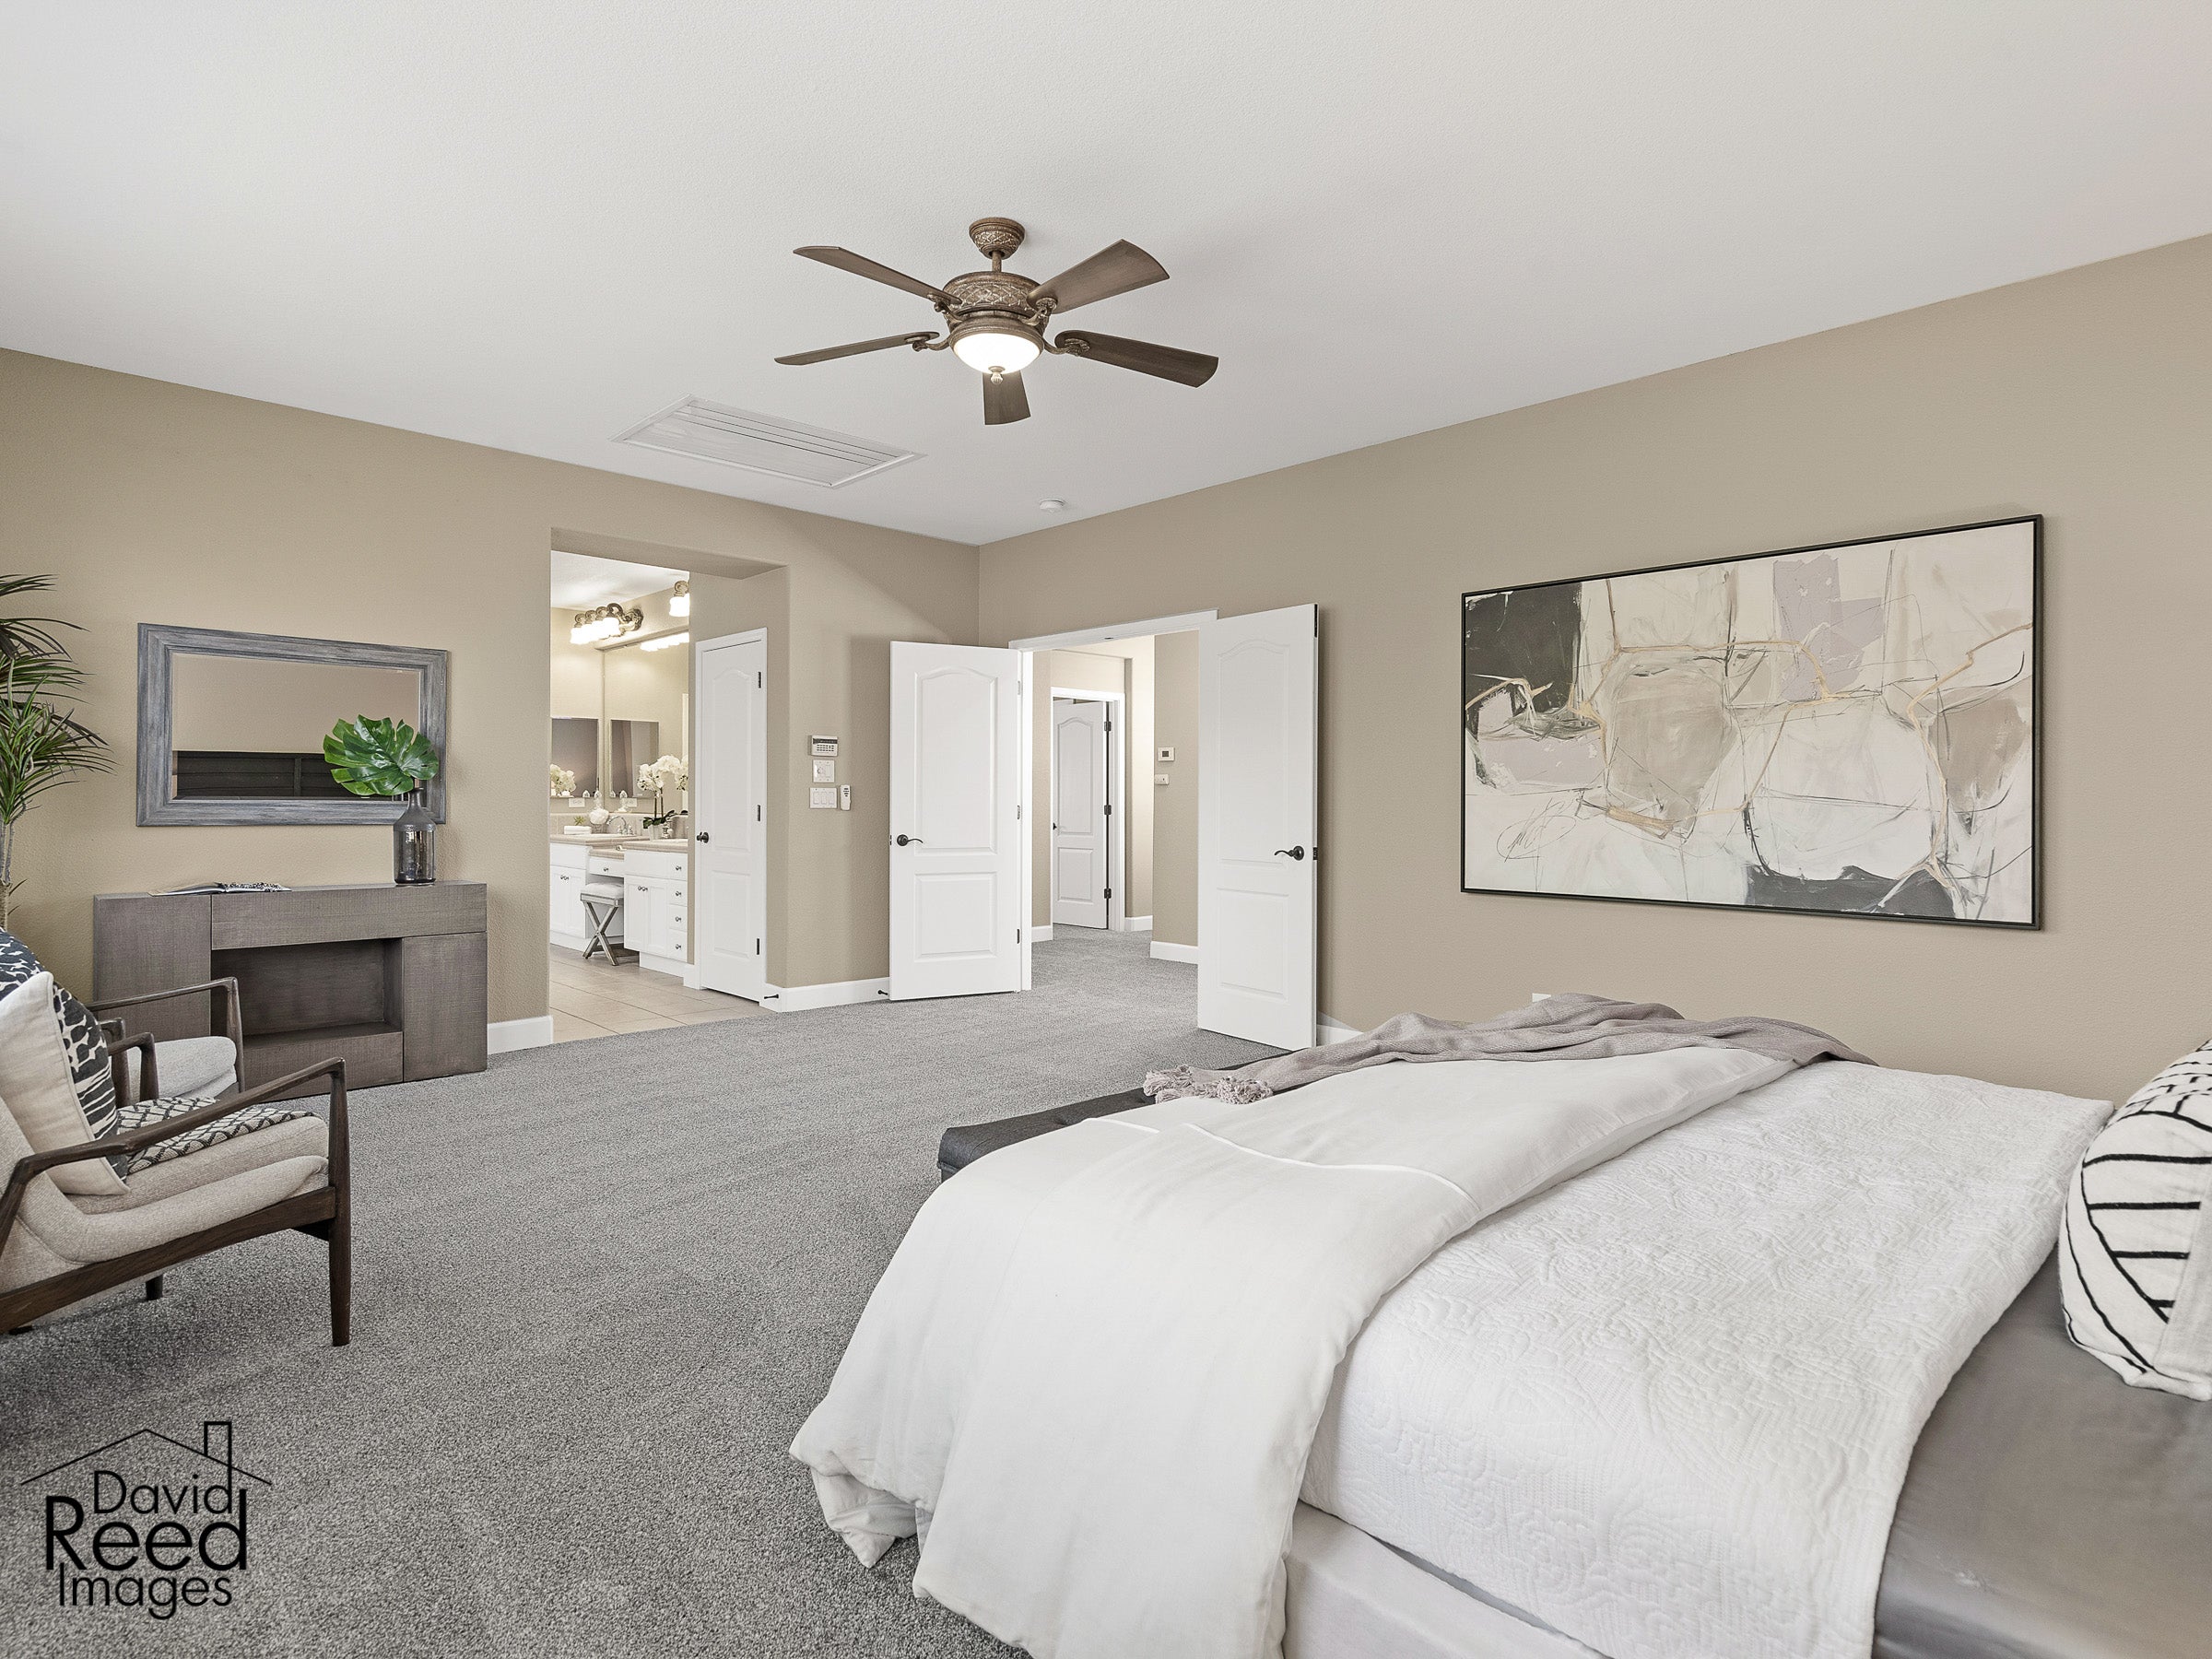 Premiere Home Staging Projects | Master bedroom interior design idea - Village Green Dr, El Dorado Hills